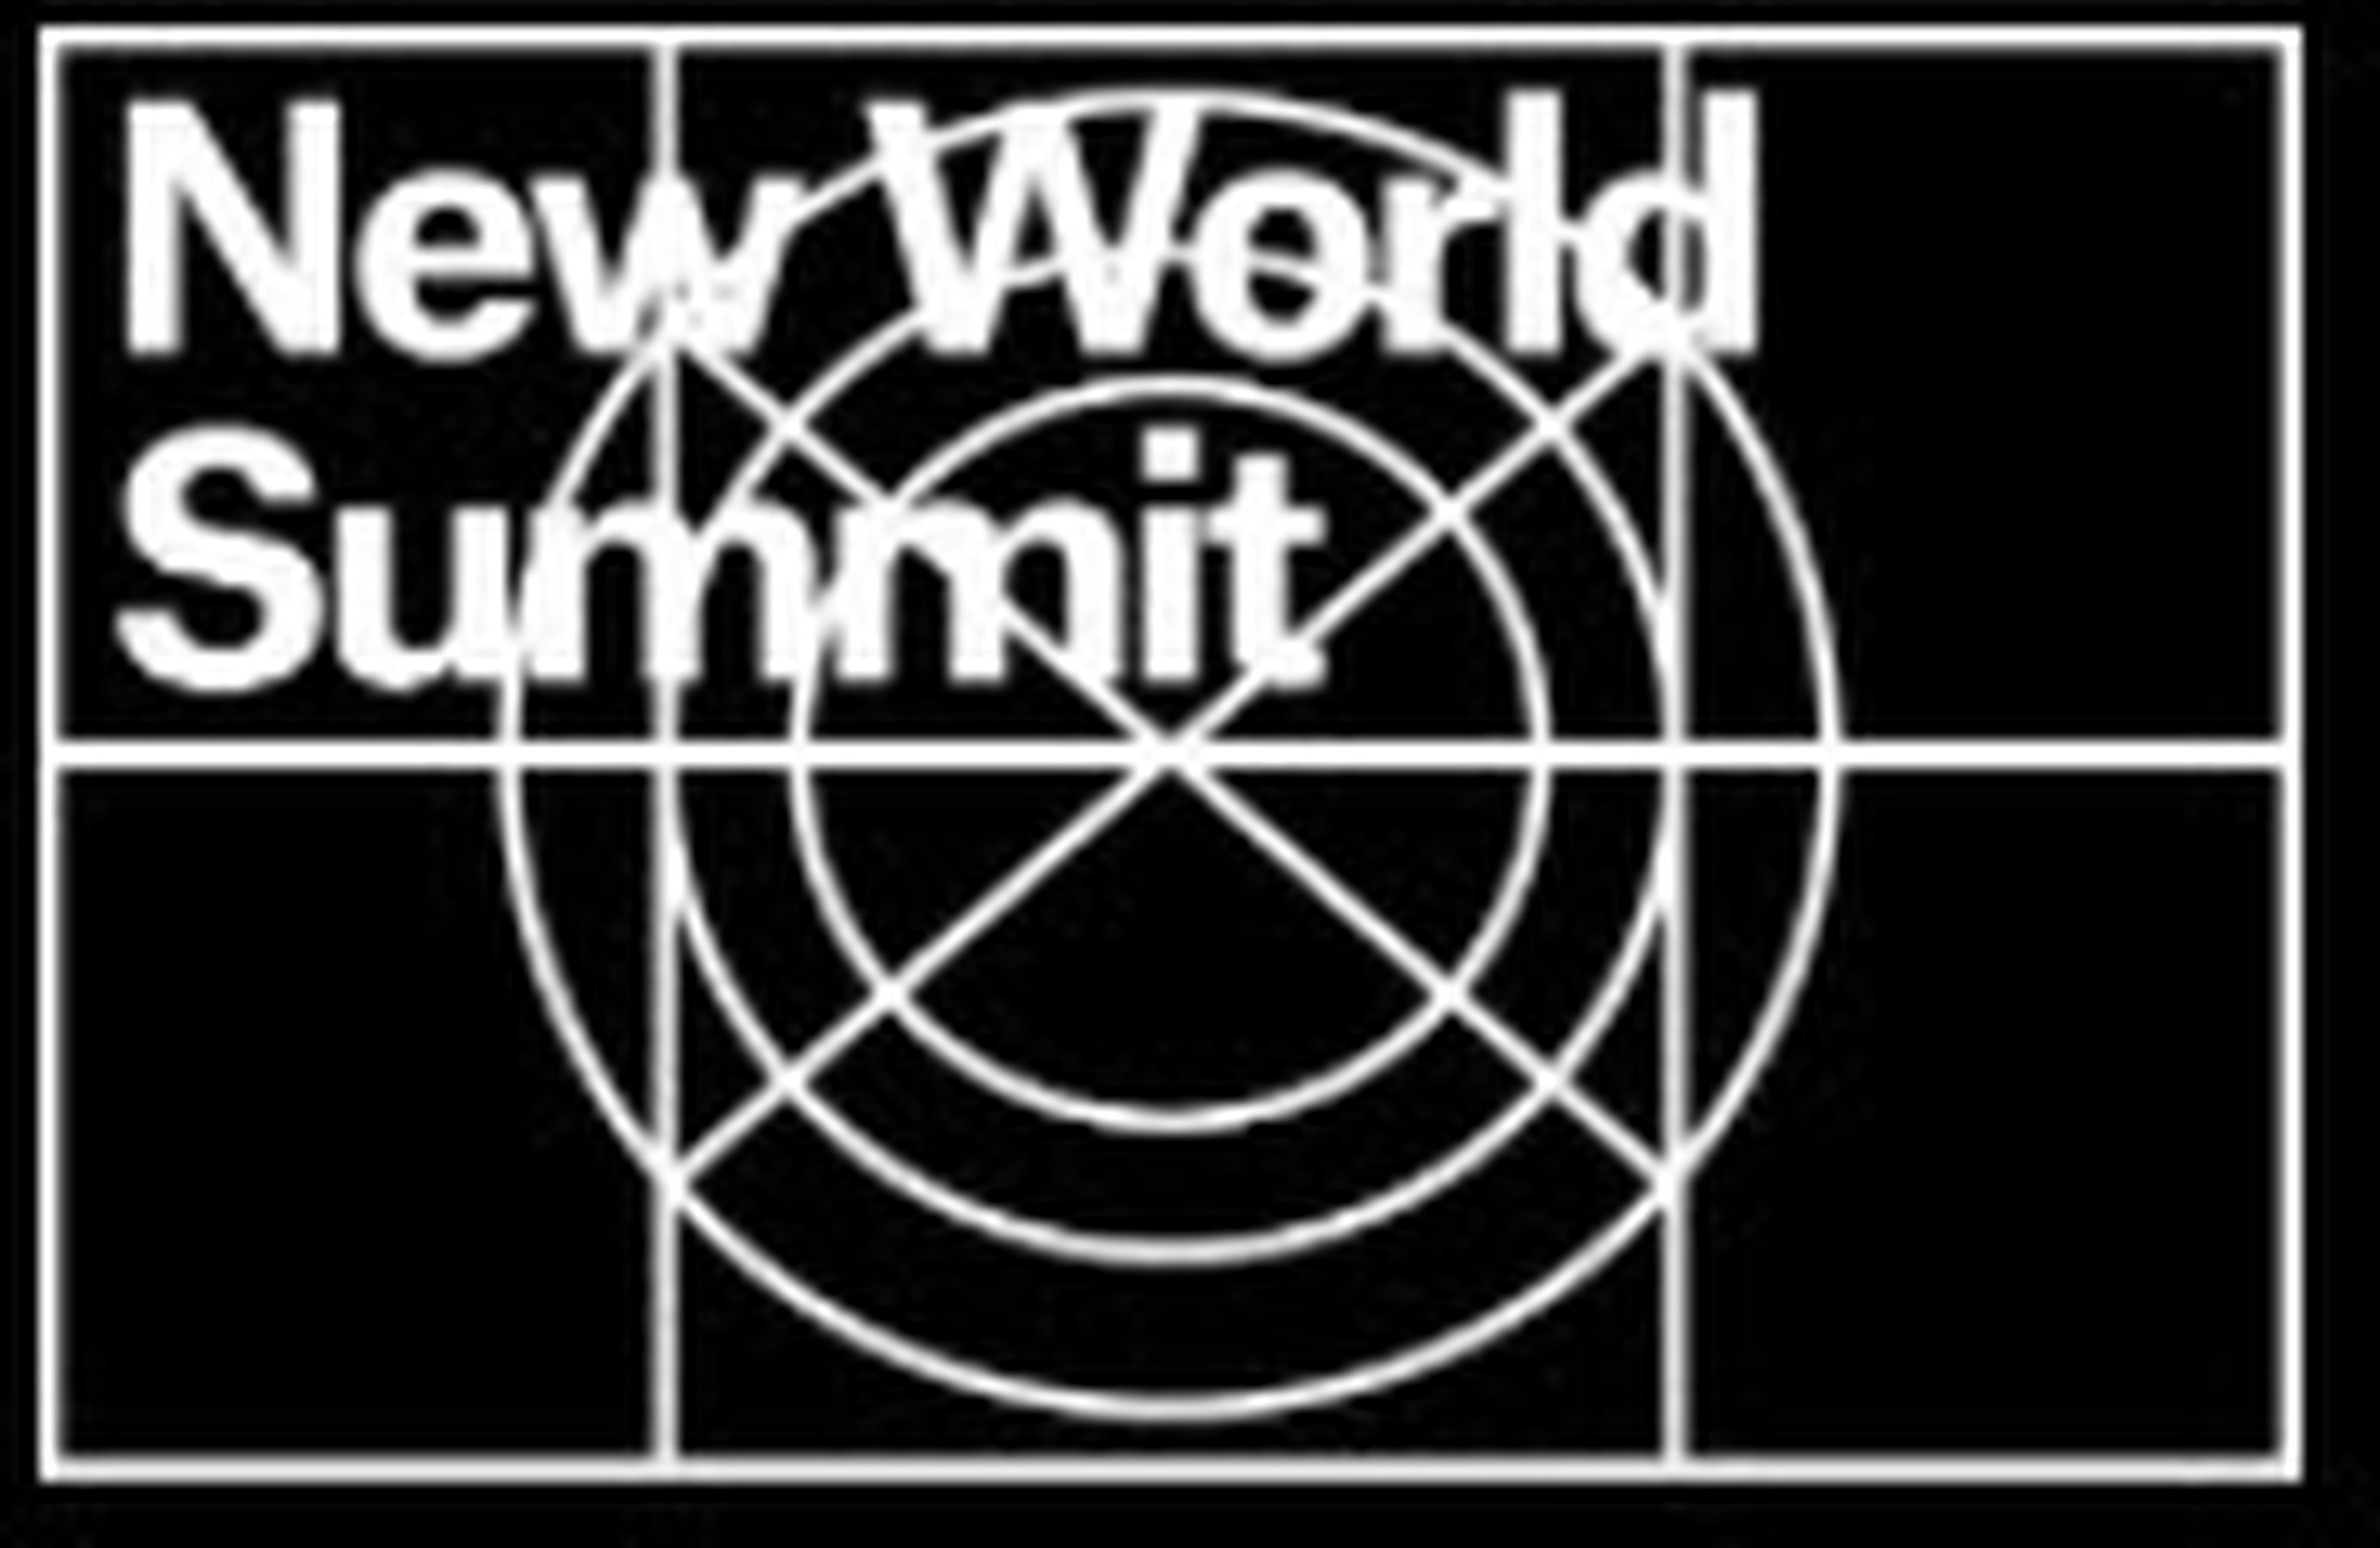 New World Summit Utrecht